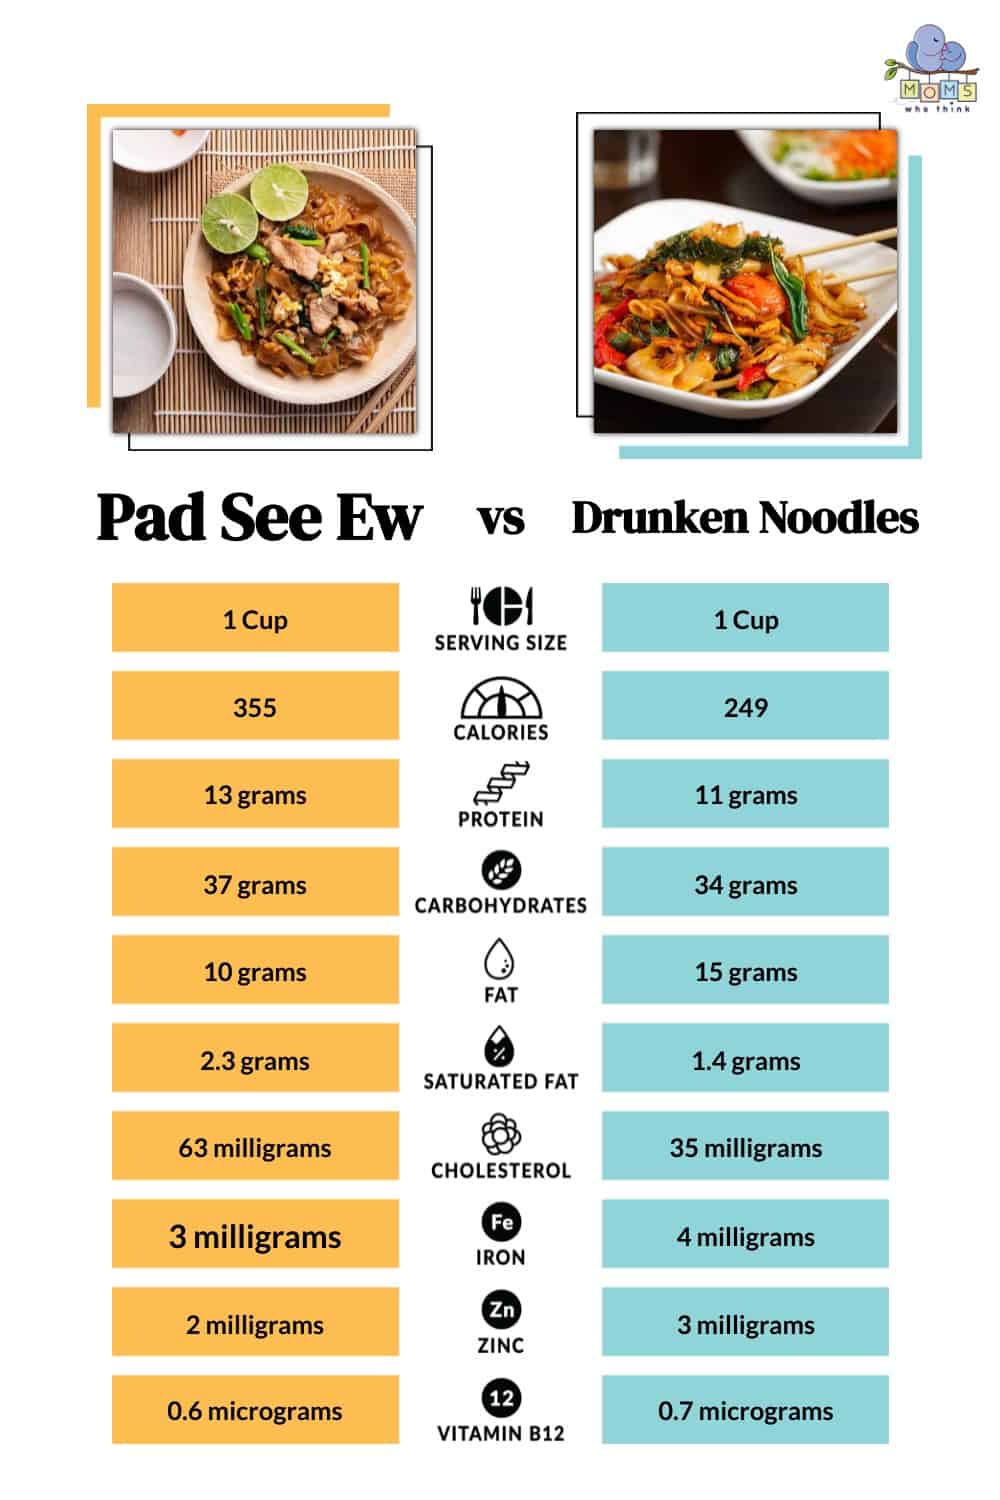 Pad See Ew vs Drunken Noodles: Which is Healtheir